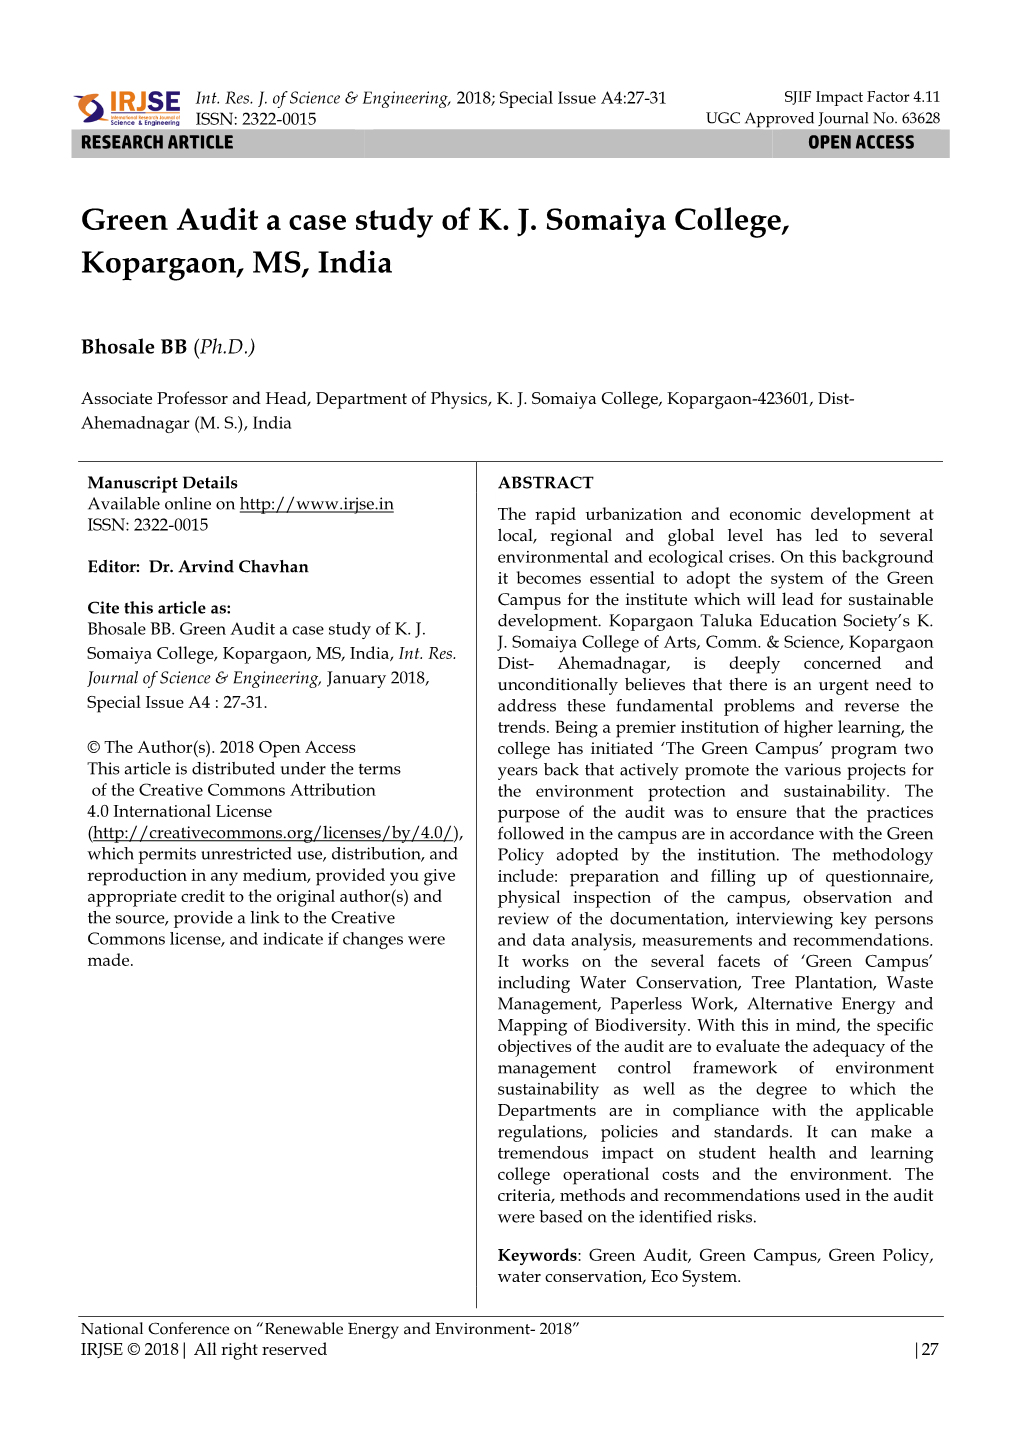 Green Audit a Case Study of K. J. Somaiya College, Kopargaon, MS, India